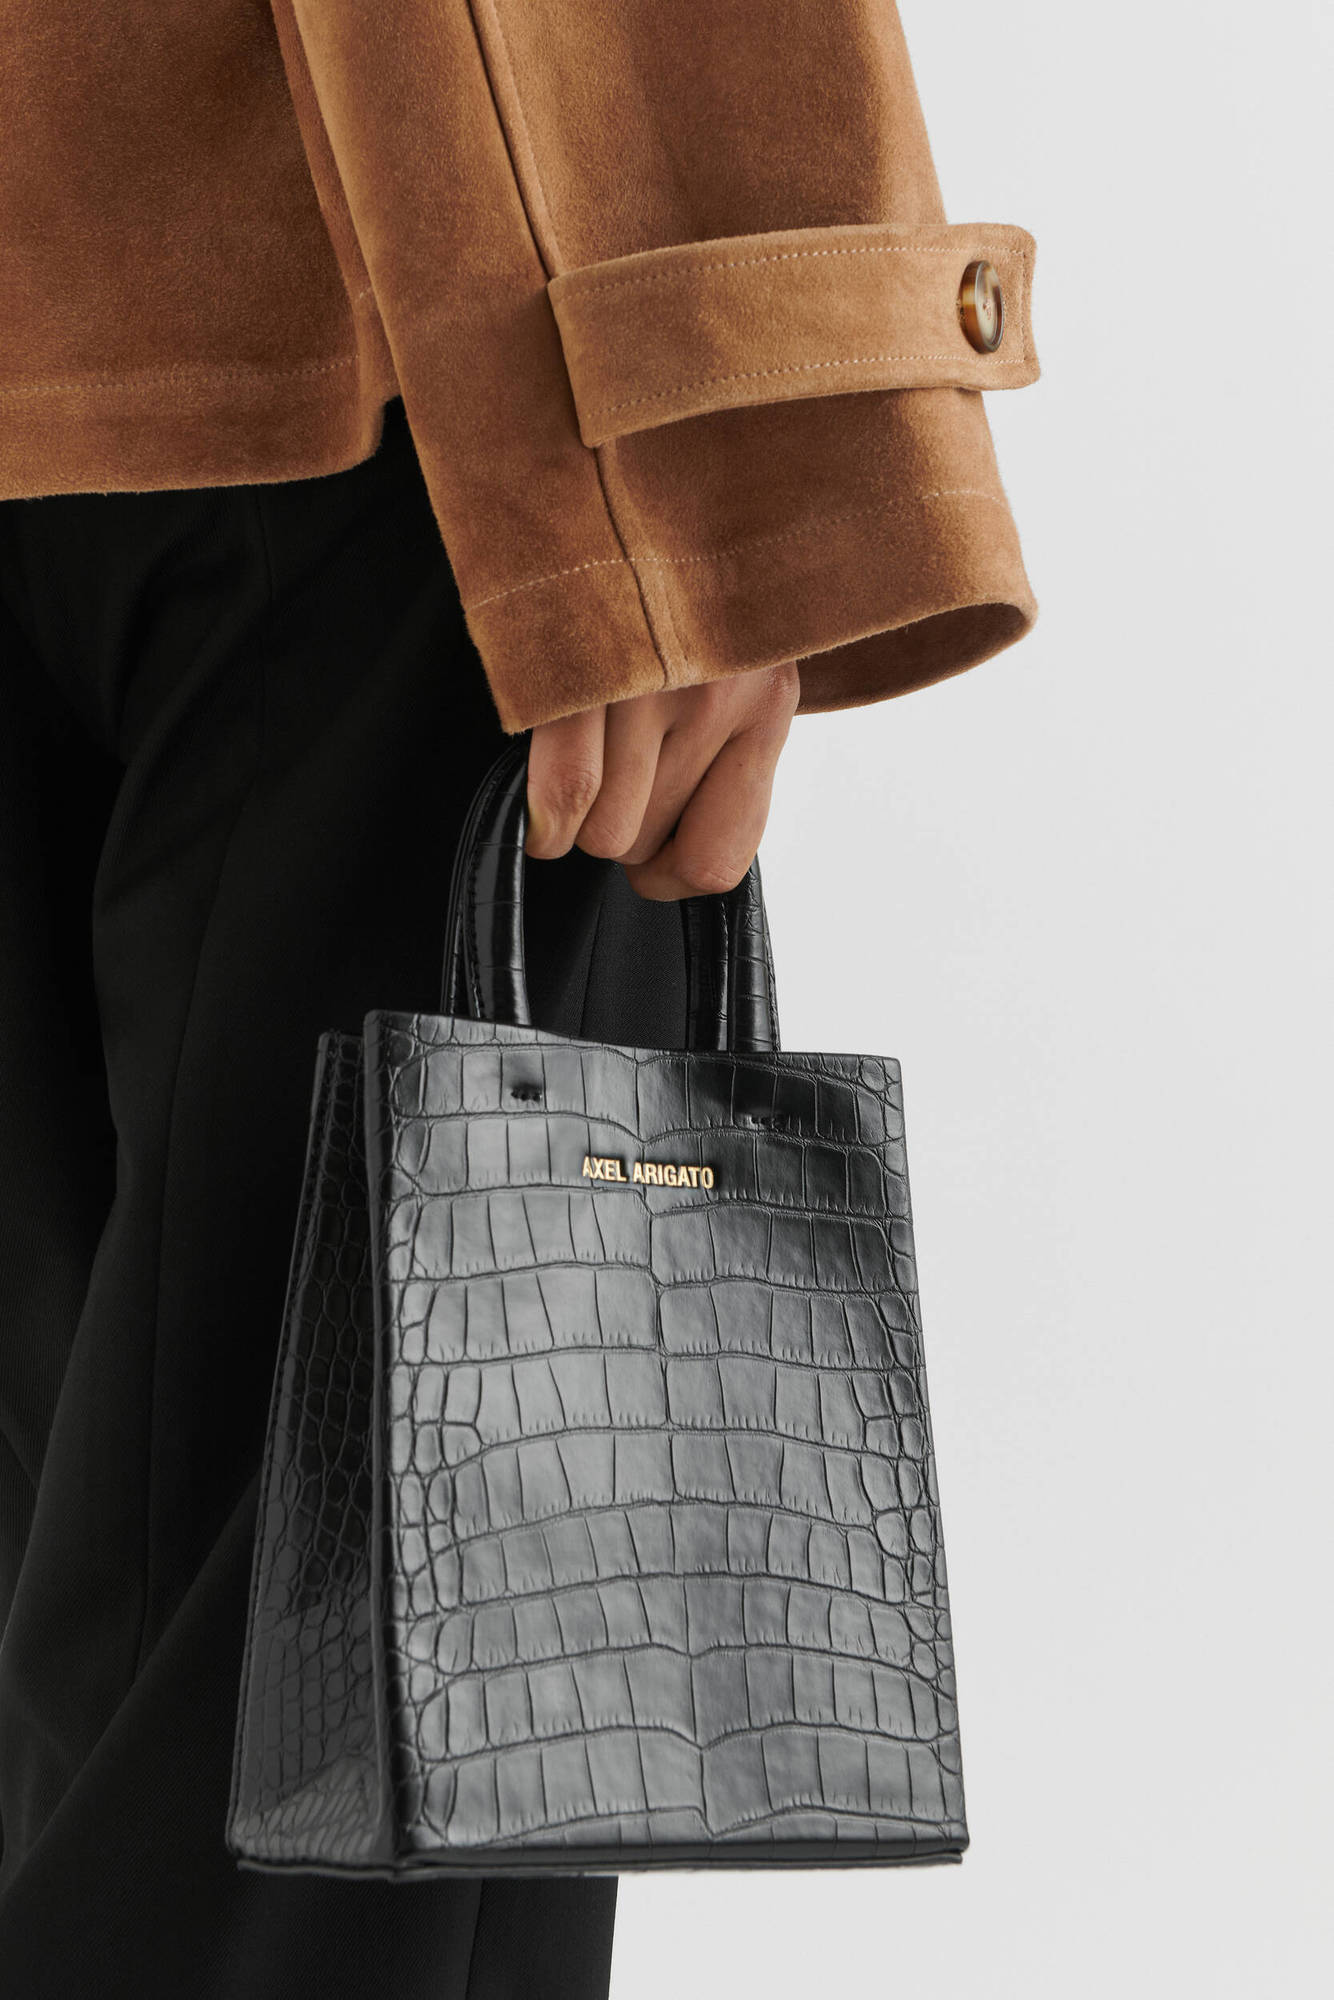 AXEL ARIGATO Shopping Bag Mini in Croco Black